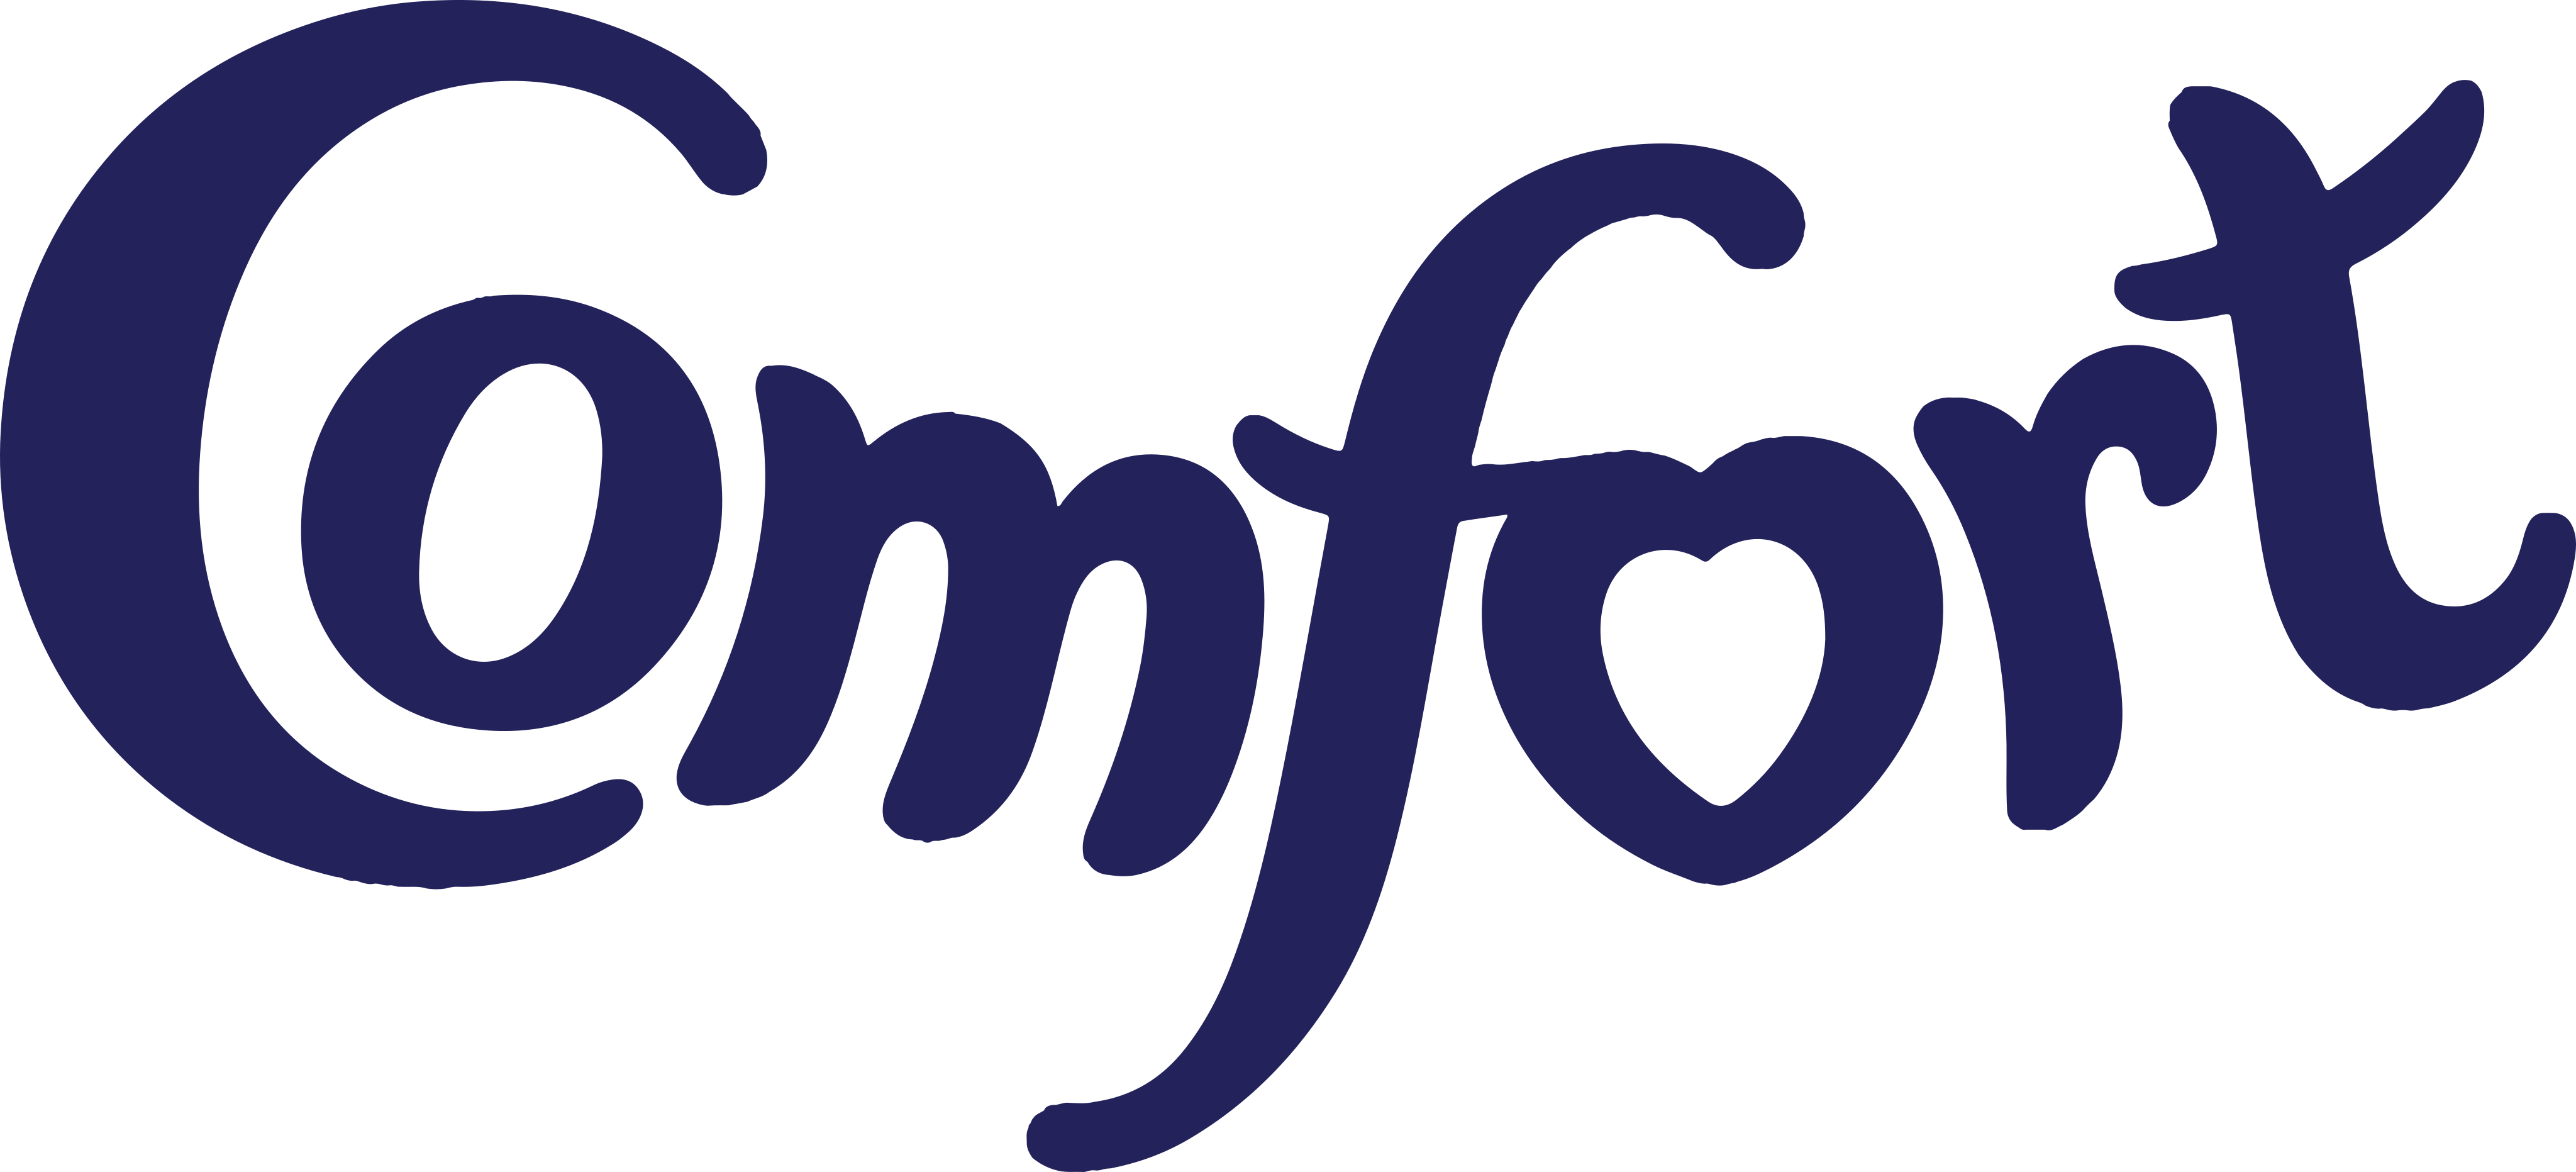 comfort logo - Comfort Logo